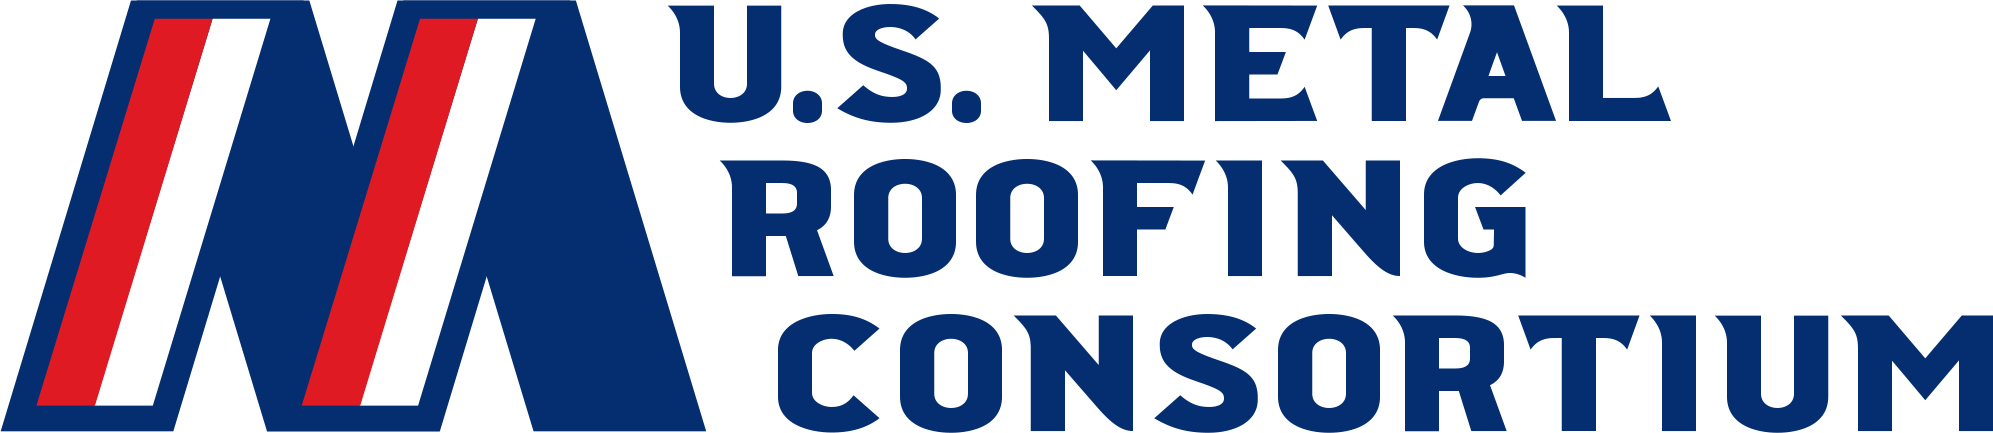 US Metal Roofing Consortium